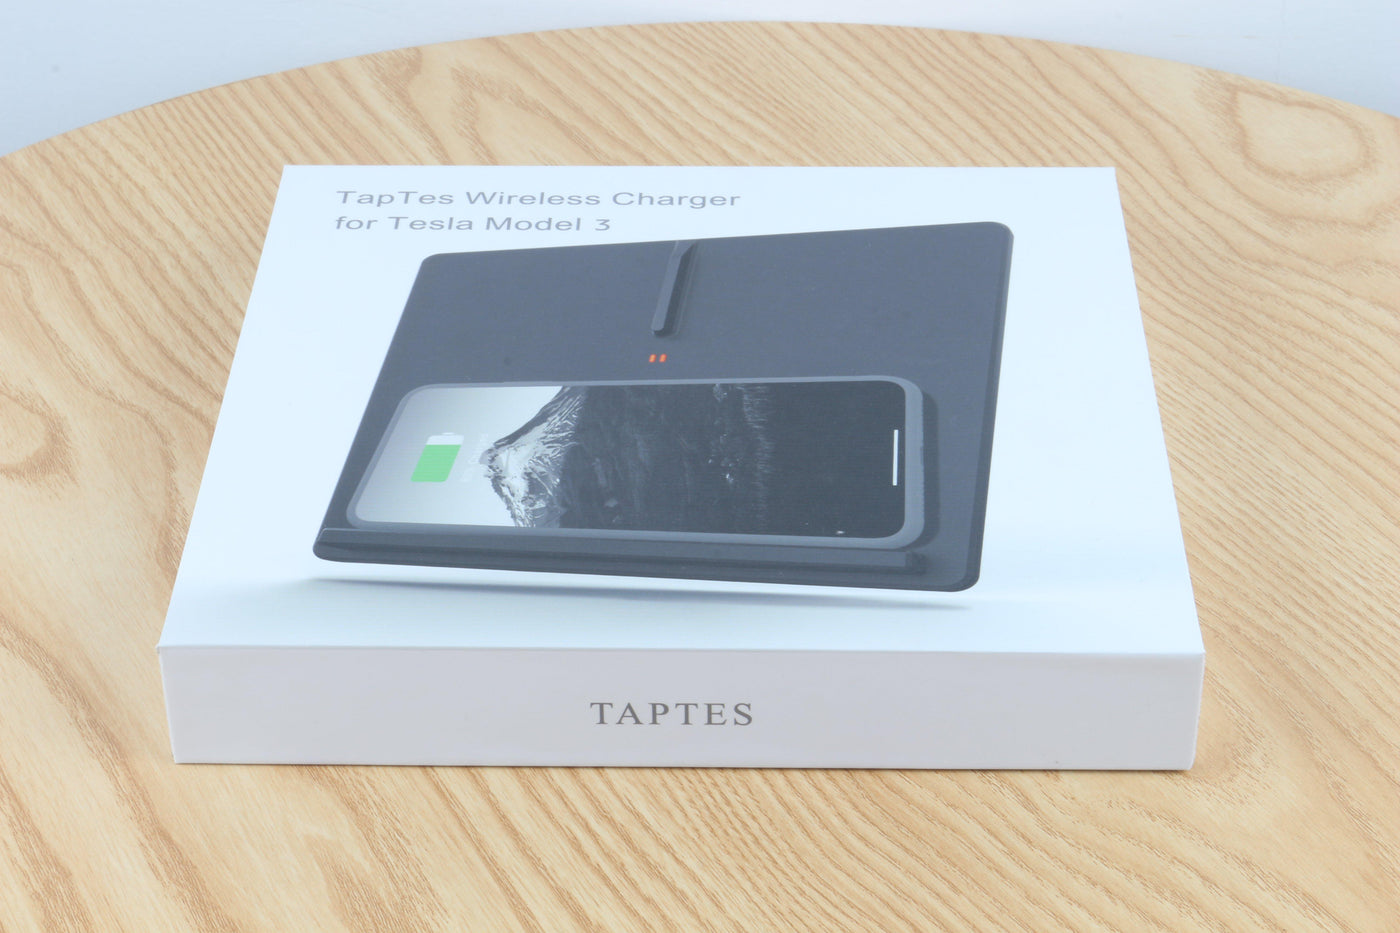 TAPTES Gen 2 Wireless Charger for Tesla Model 3